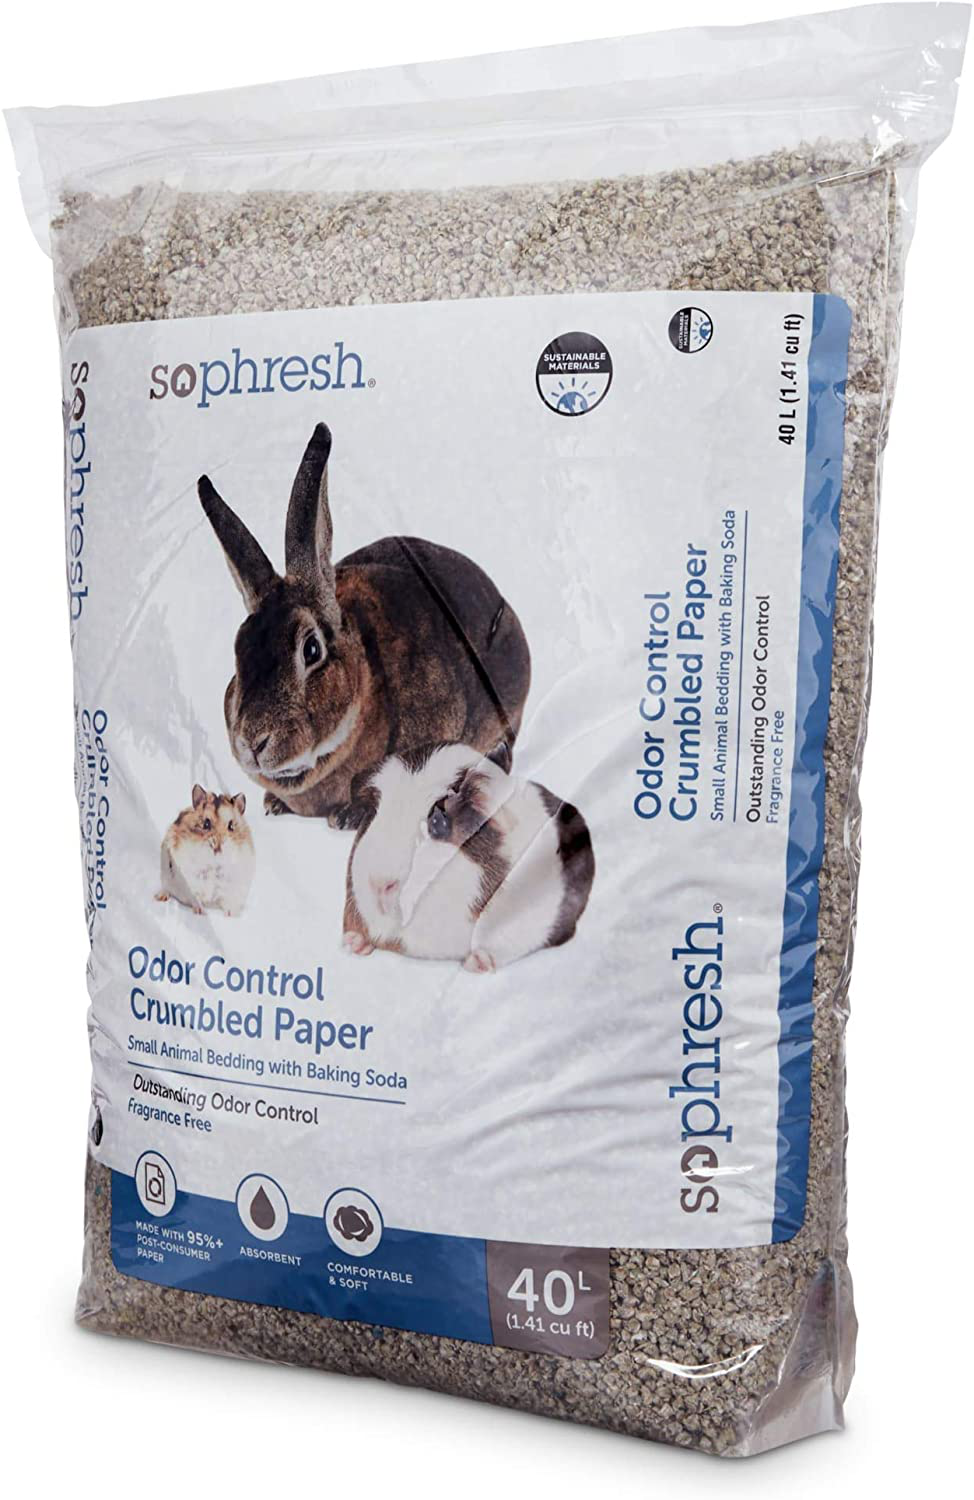 Petco Brand - so Phresh Crumbled Paper Small Animal Bedding